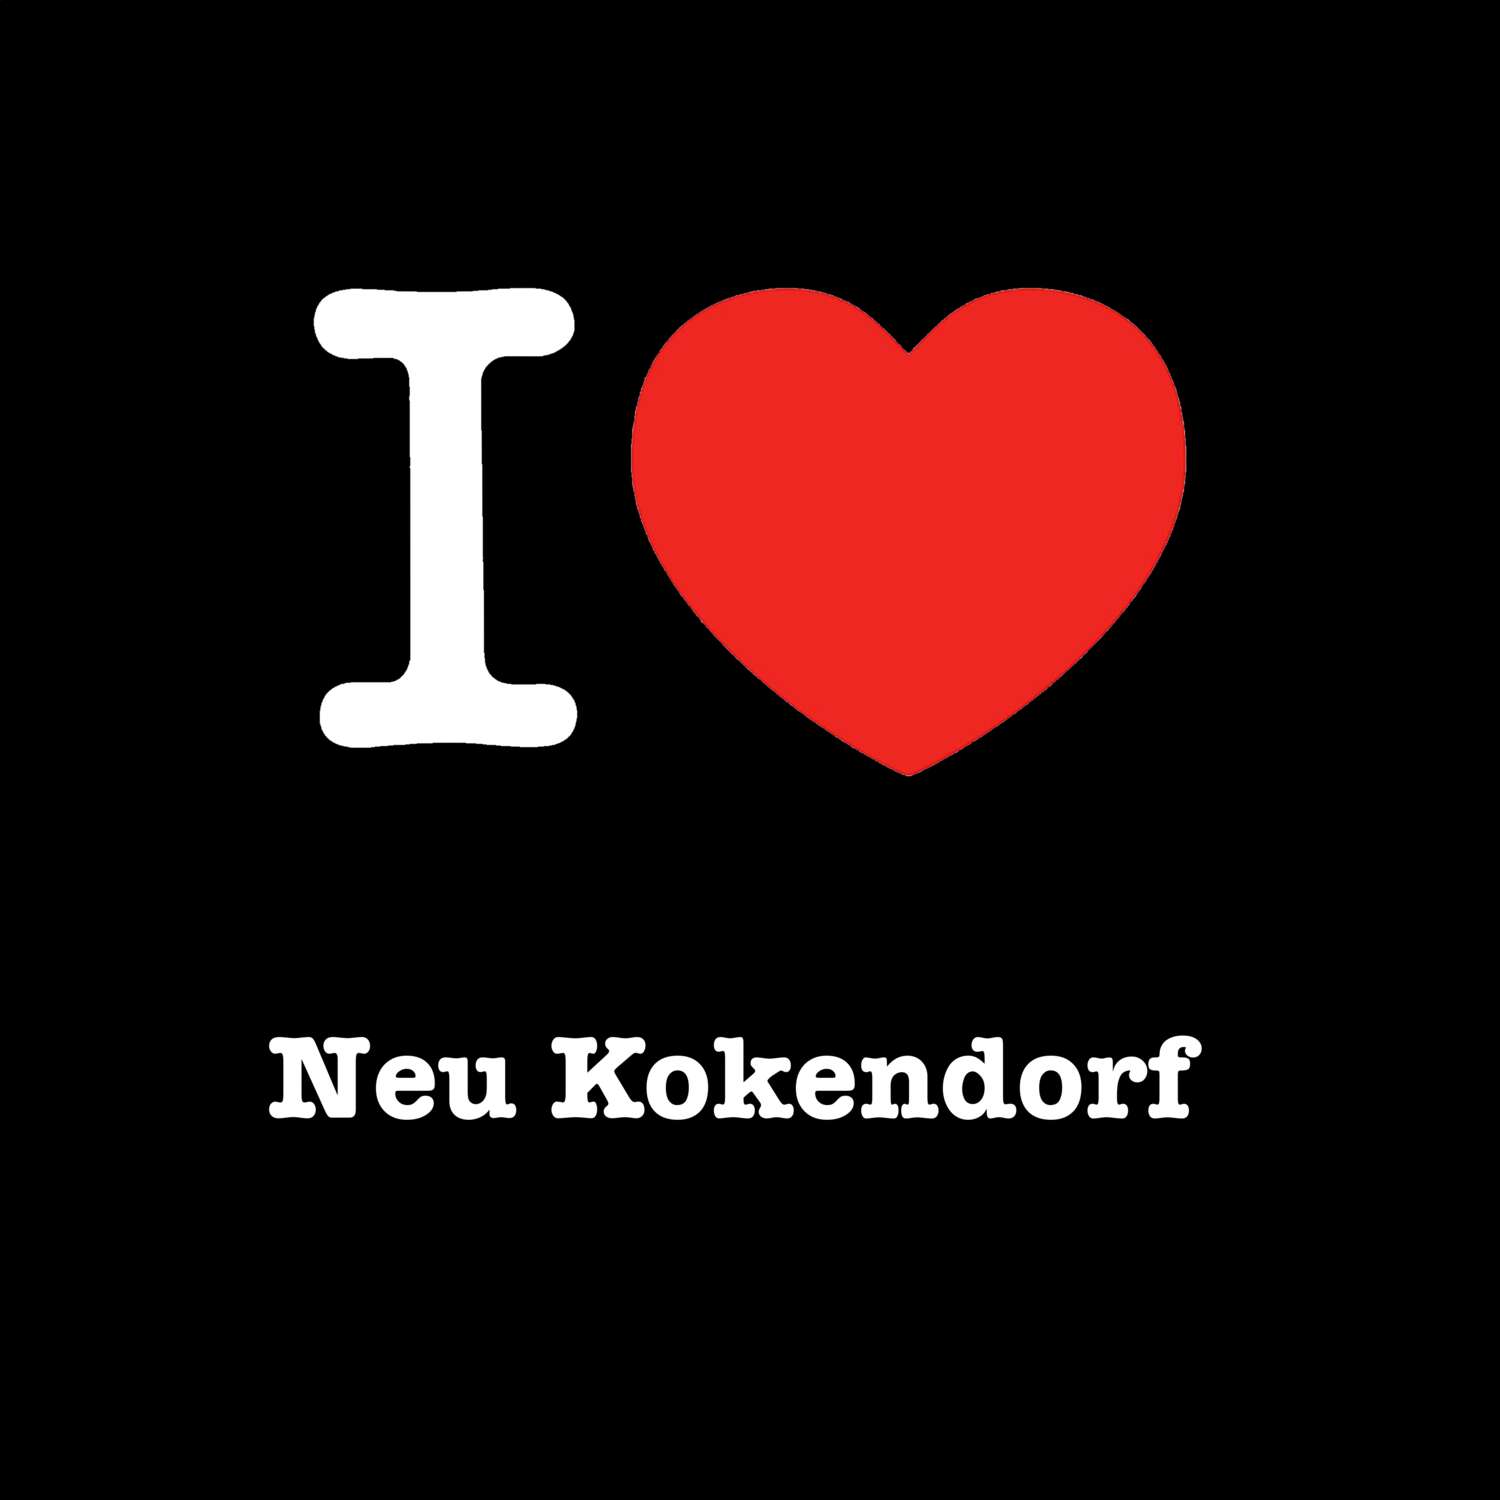 Neu Kokendorf T-Shirt »I love«